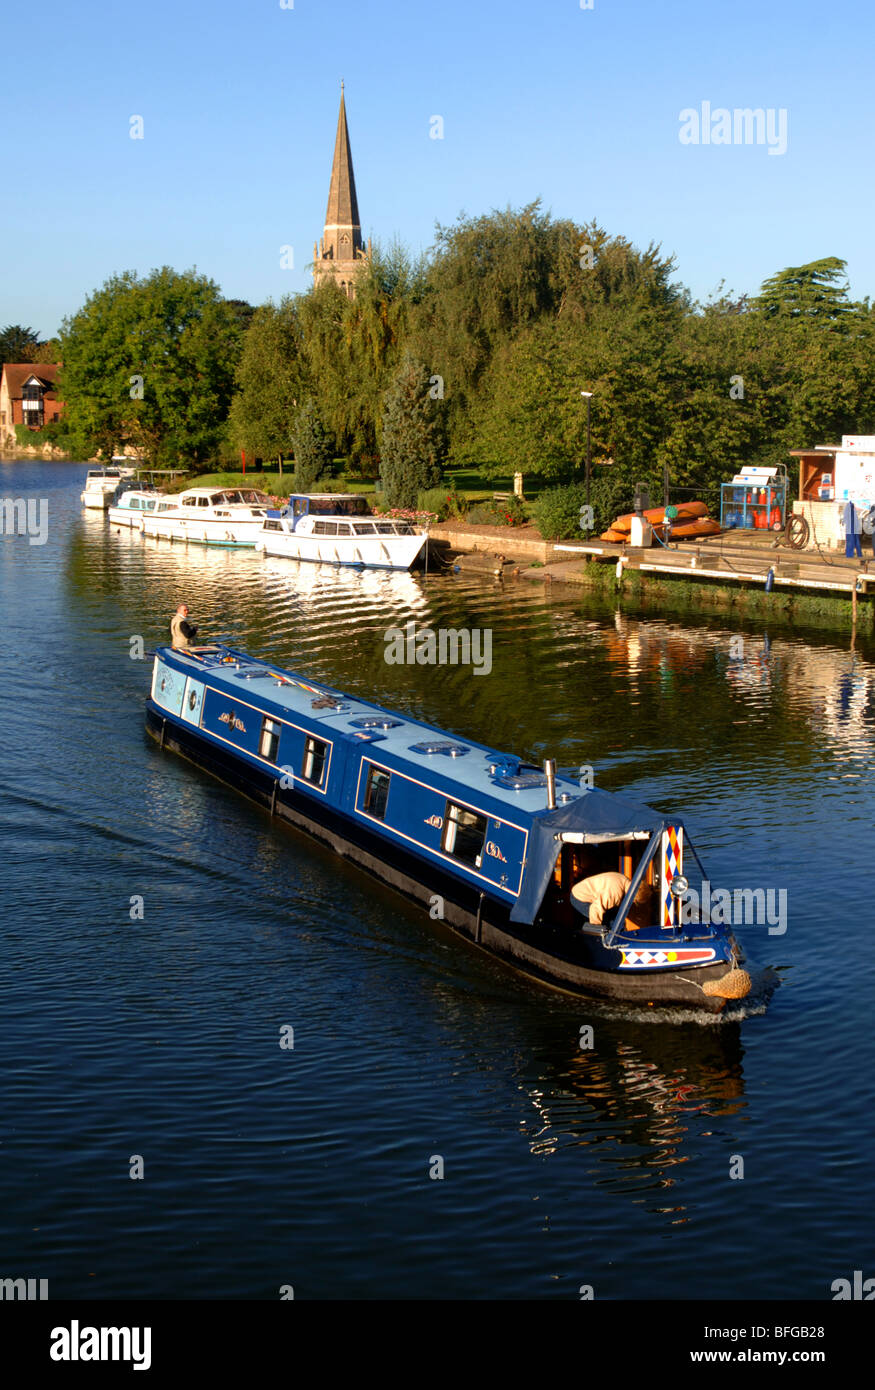 The River Thames, Abingdon, Oxfordshire, UK Stock Photo